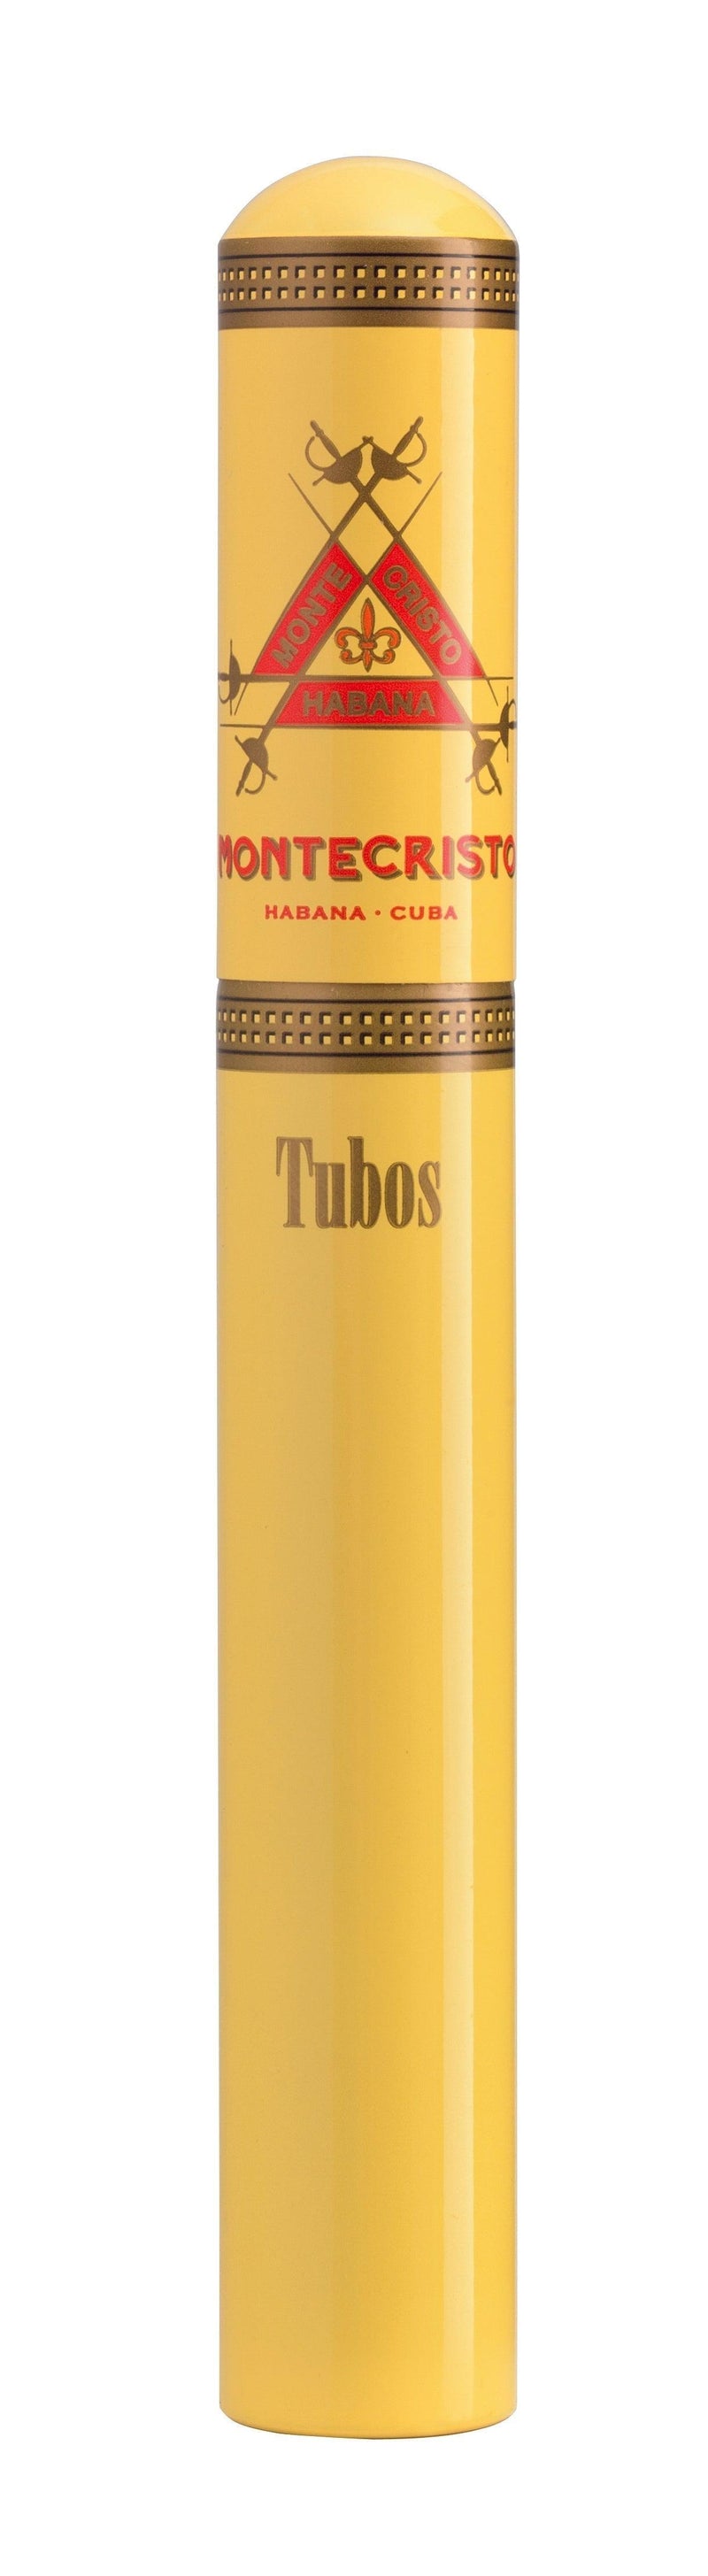 Montecristo - Tubos - LA GALANA - LA GALANA - Zigarre - Zigarren - Zigarren kaufen - Zigarrendreherin | Zigarrendreher | Zigarrenmanufaktur | Tabakgeschäft